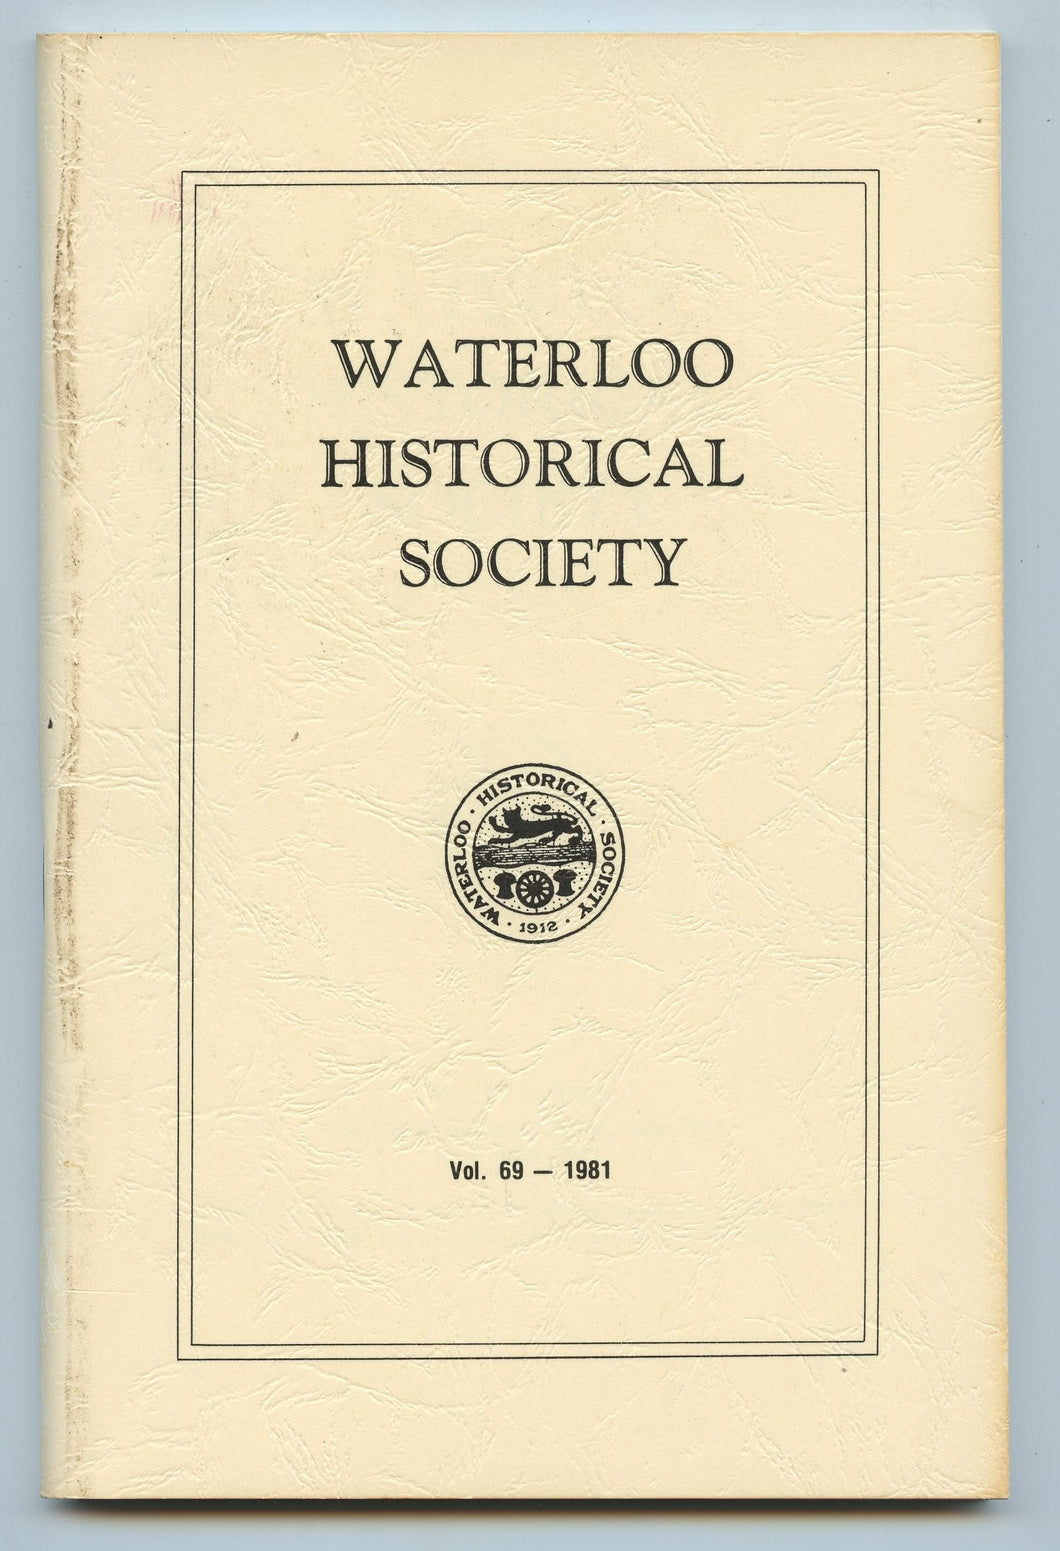 Waterloo Historical Society Vol. 69 - 1981